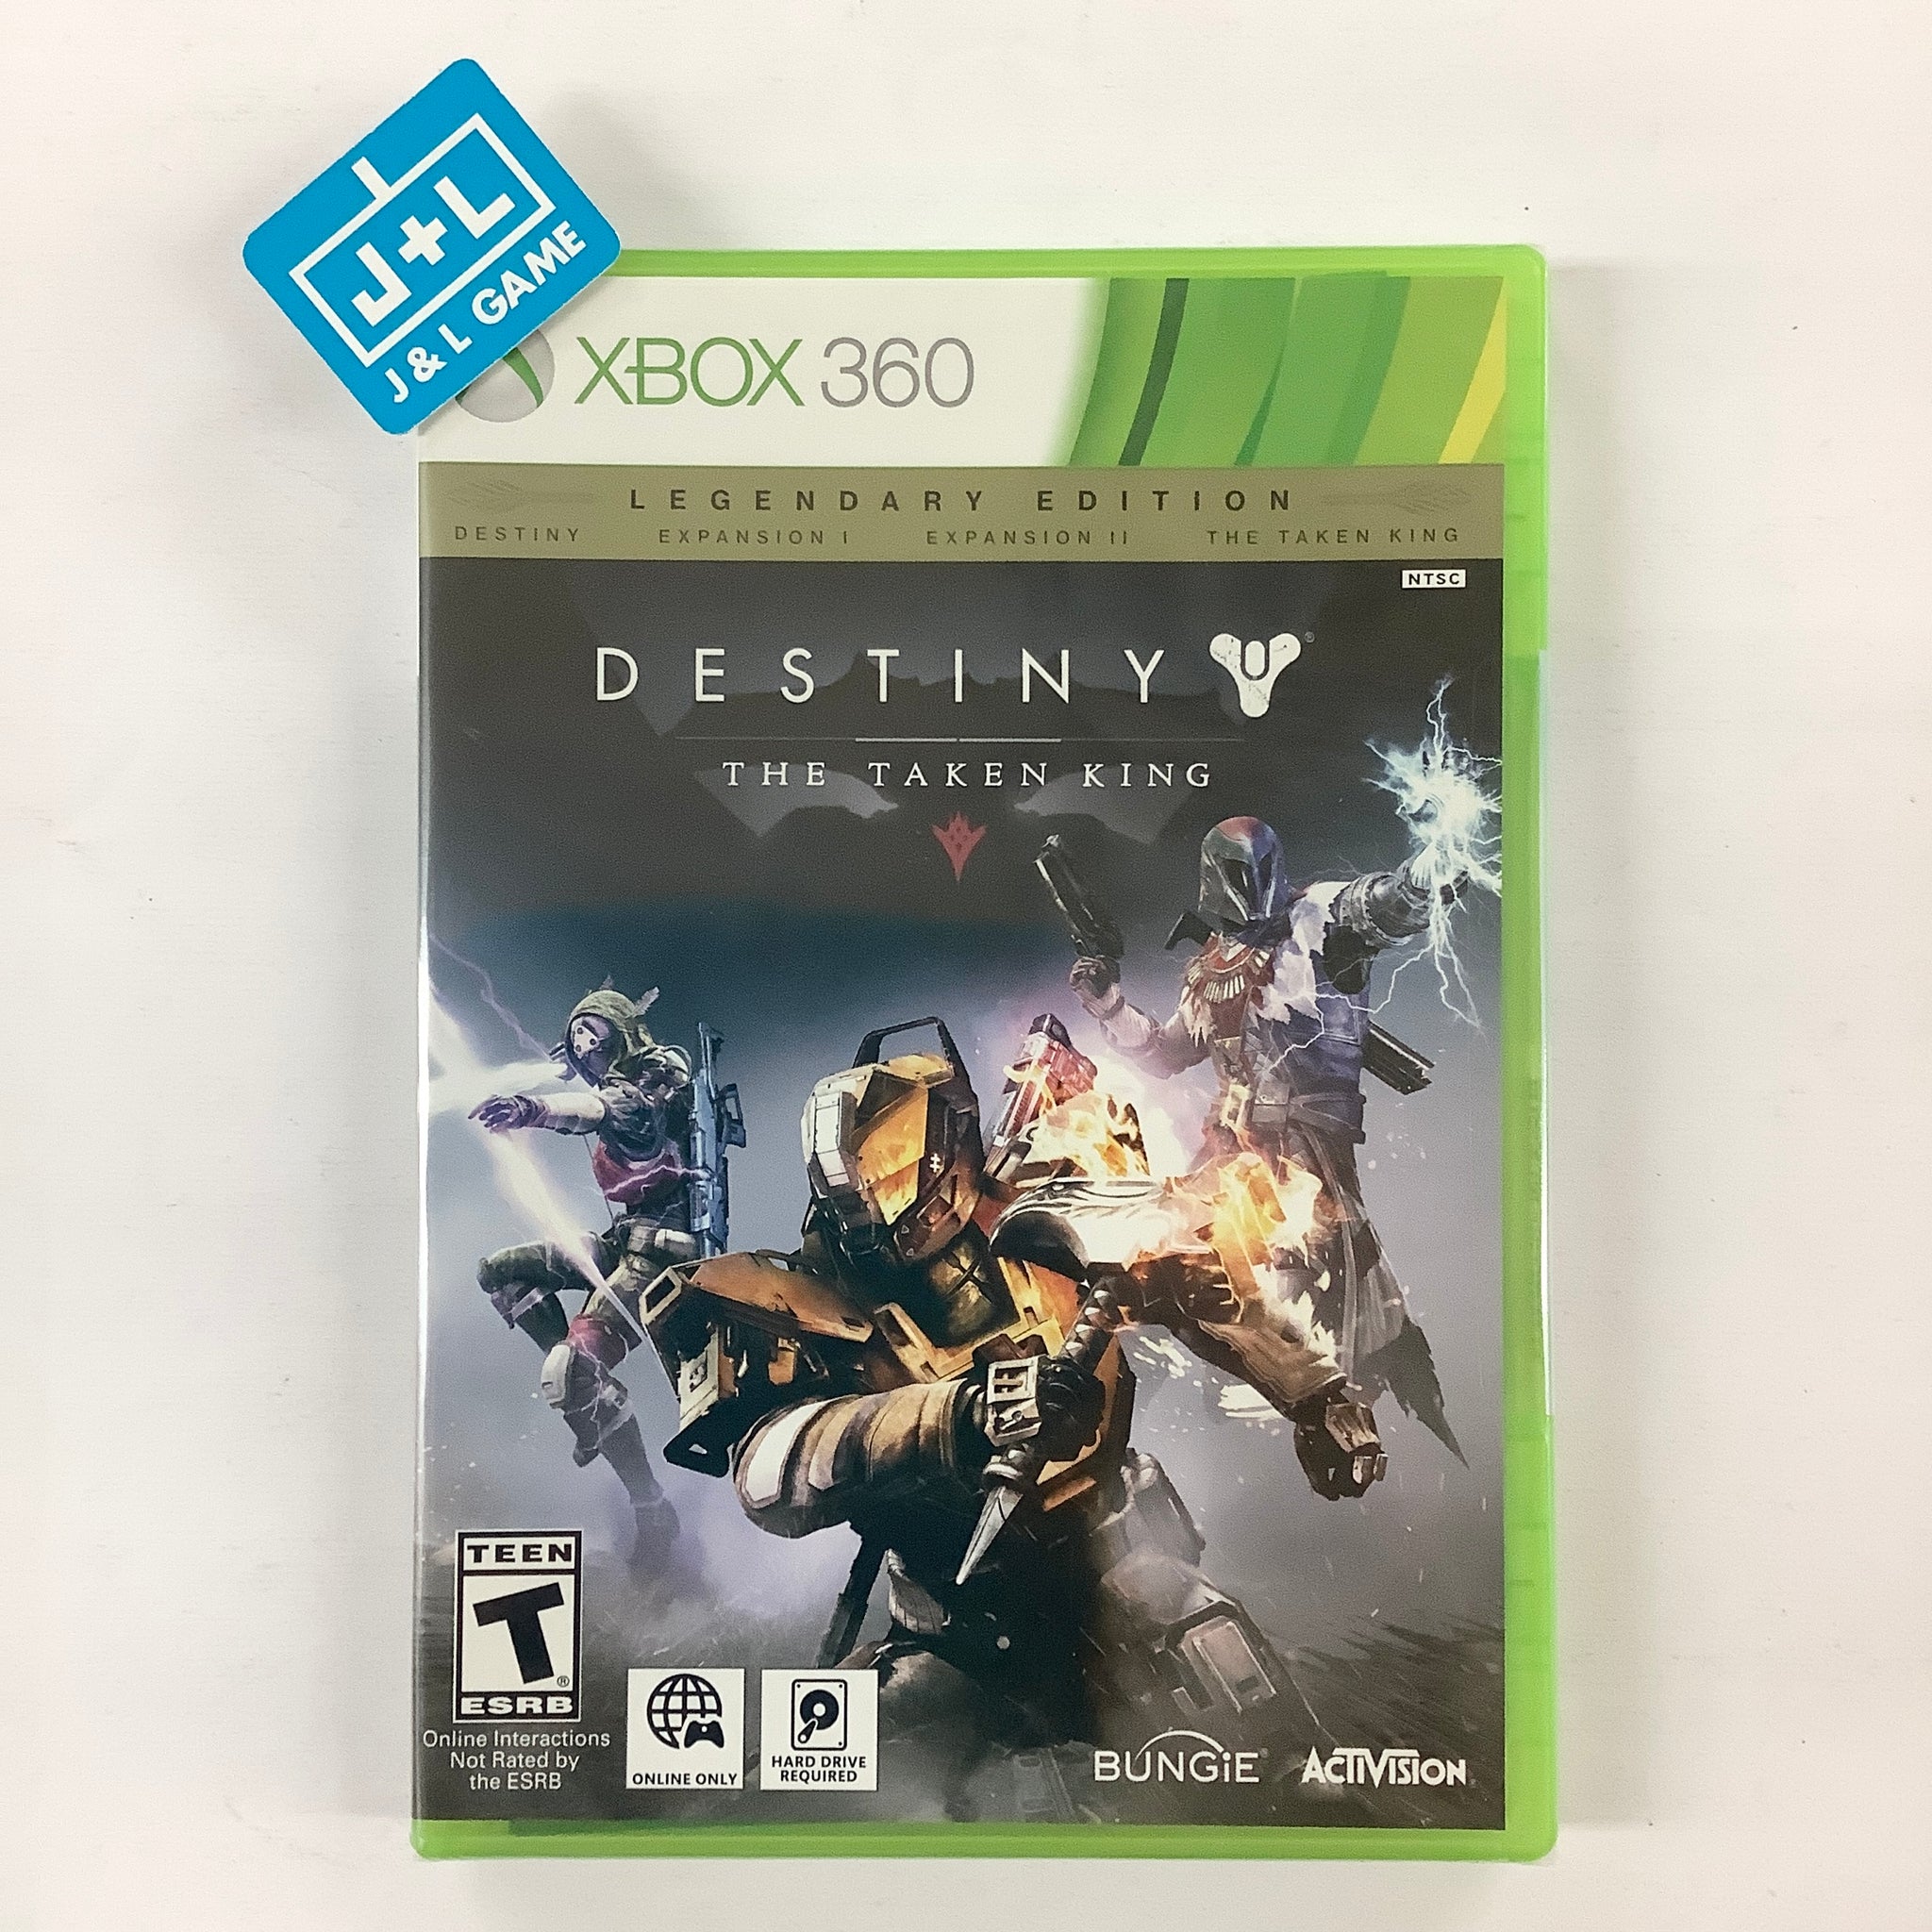 Destiny 2 (Limited Edition) - (PS4) Playstation 4 – J&L Video